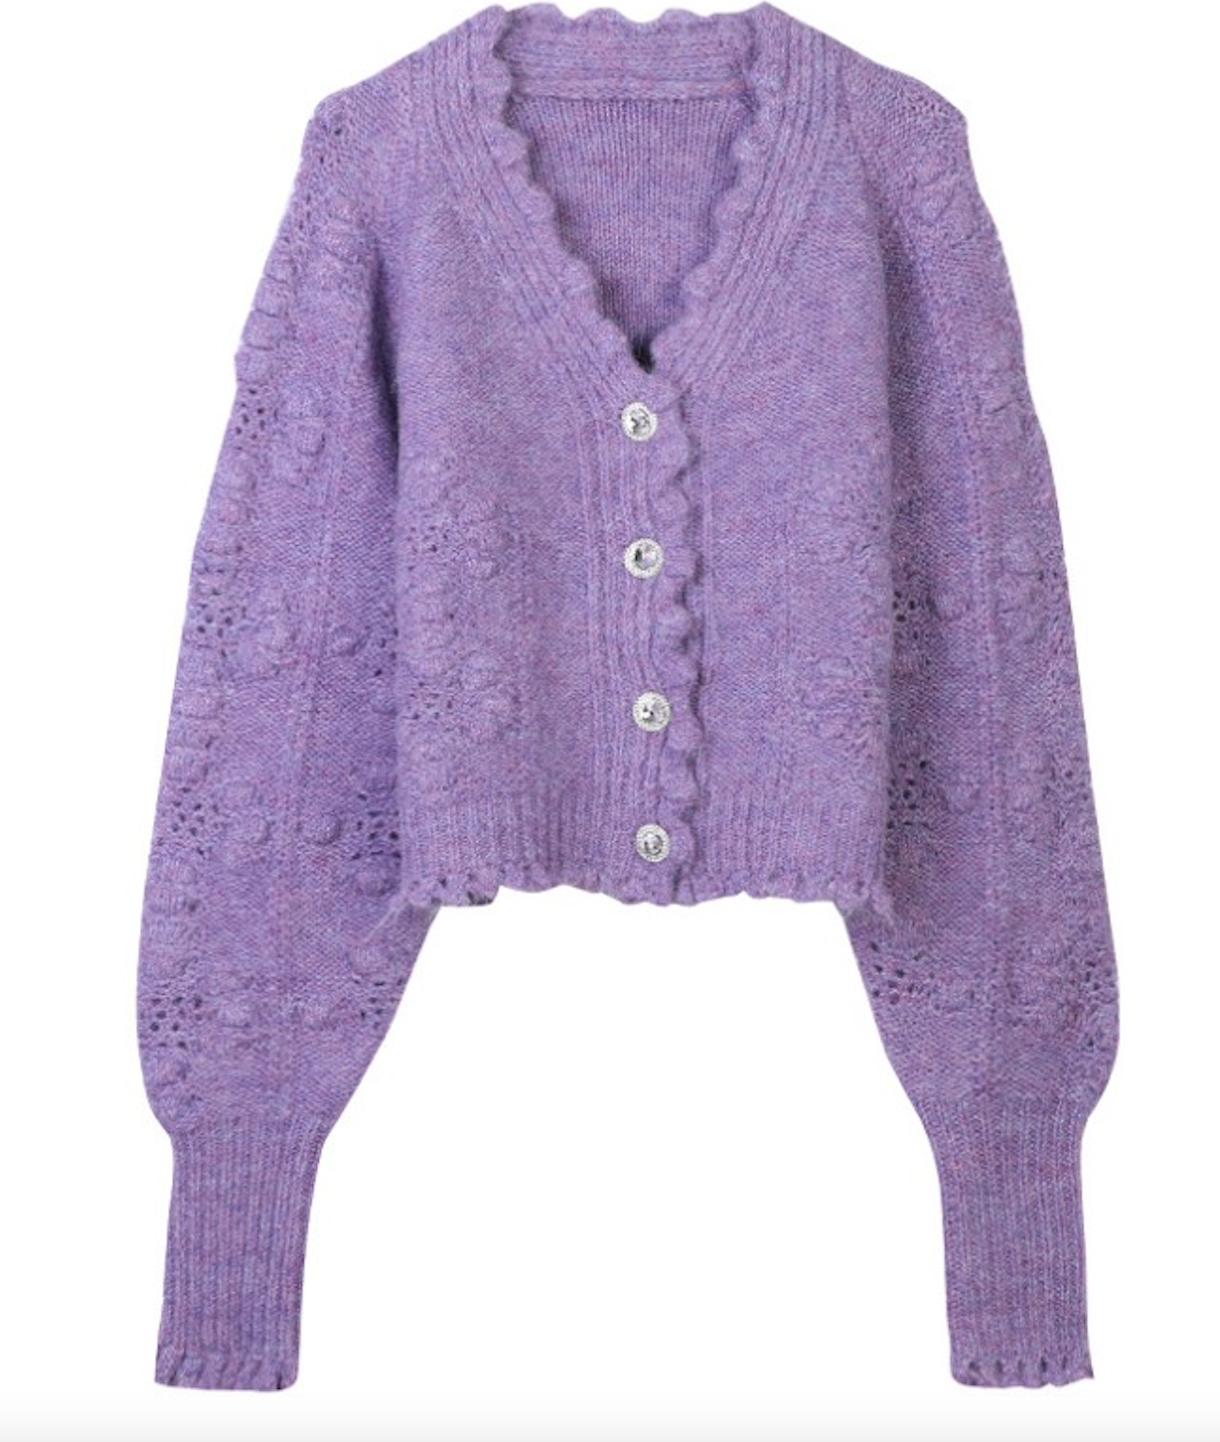 The Lavender Knit